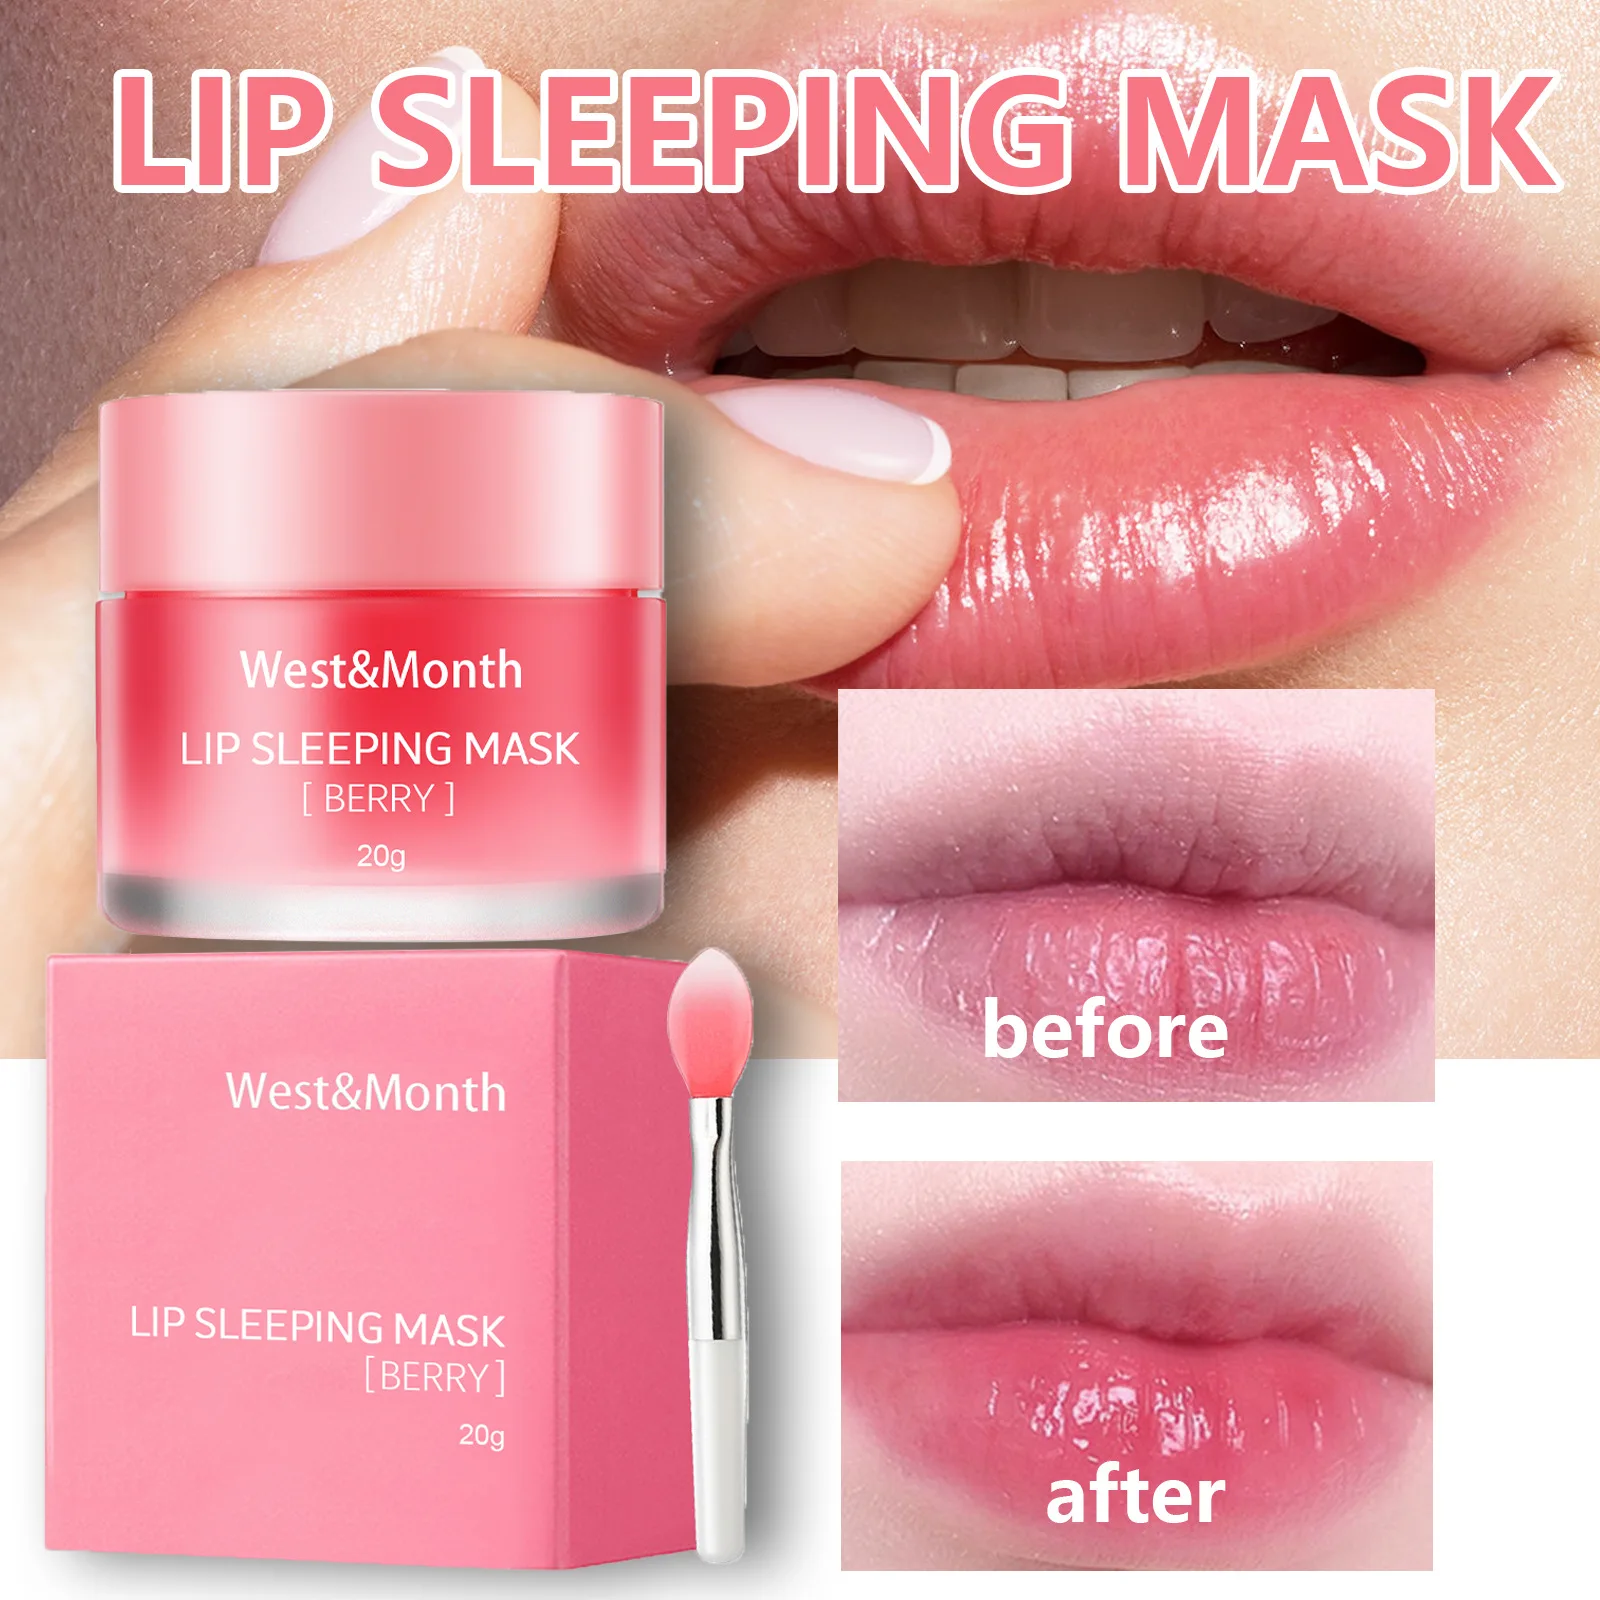 

Night Sleeping Lip Mask Fruit Natural Extract Moisturizing and Hydrating Lighten Lip Lines Exfoliate Nourishing Lips Care Balm